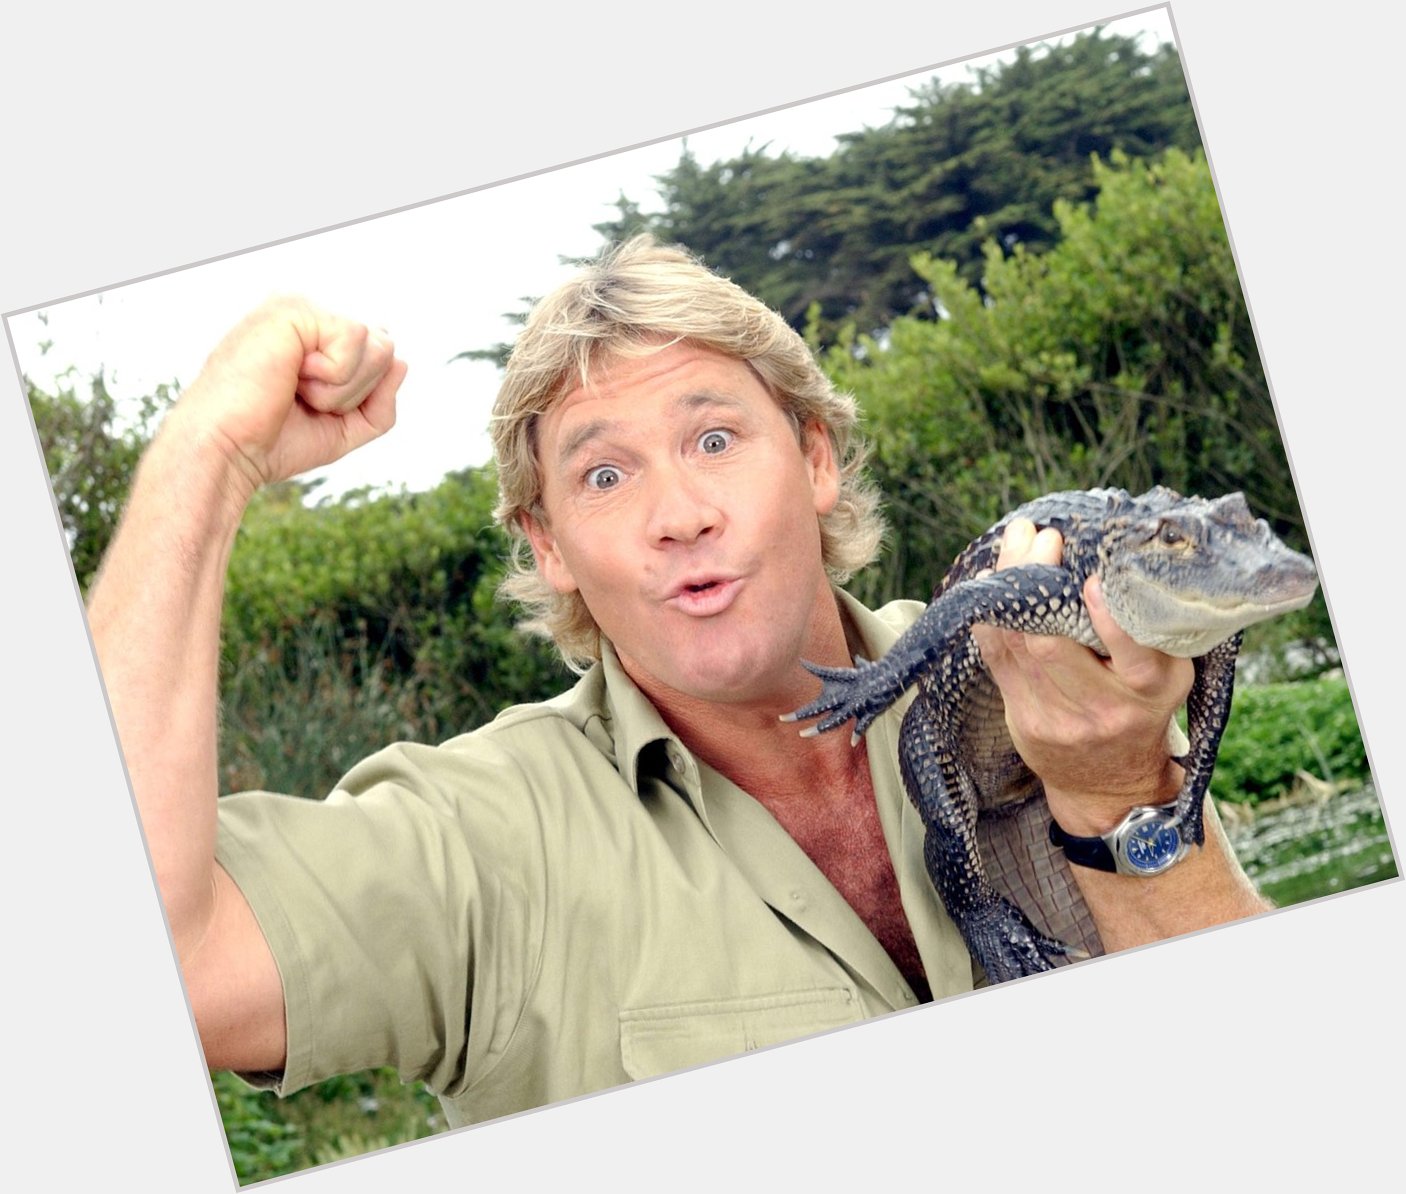 Happy birthday to my childhood hero, Steve Irwin. 
Rest in Peace, Crocodile Man Feb 22, 1962 - Sept 4, 2006 